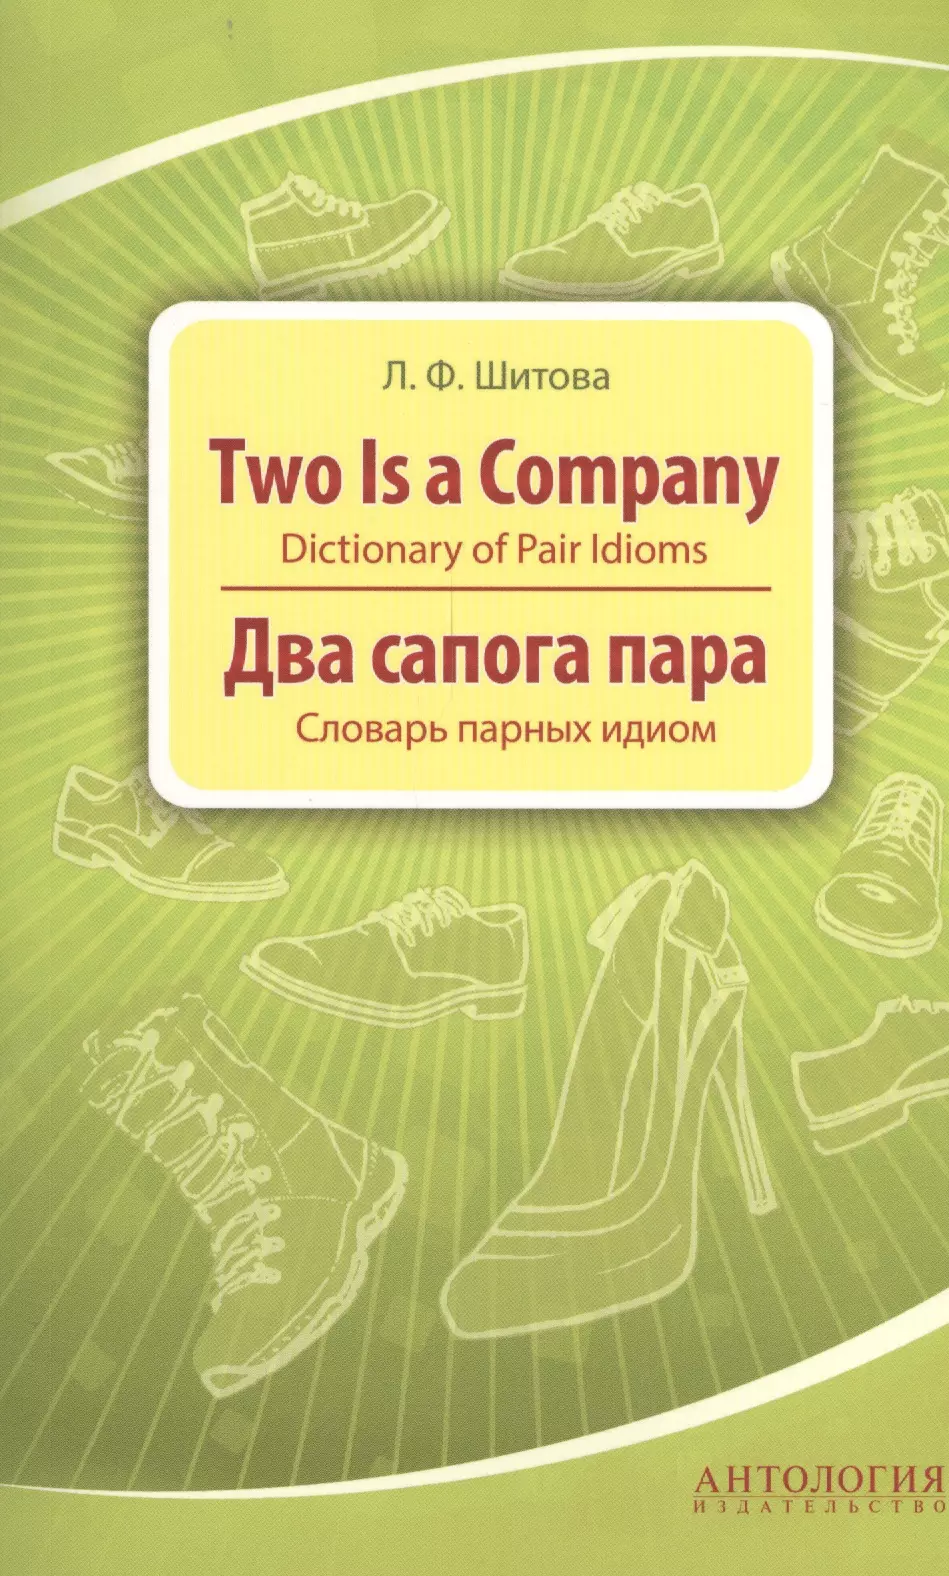 Шитова Лариса Феликсовна - Two is a Company : Dictionary of Pair Idioms =Два сапога пара : Словарь парных идиом